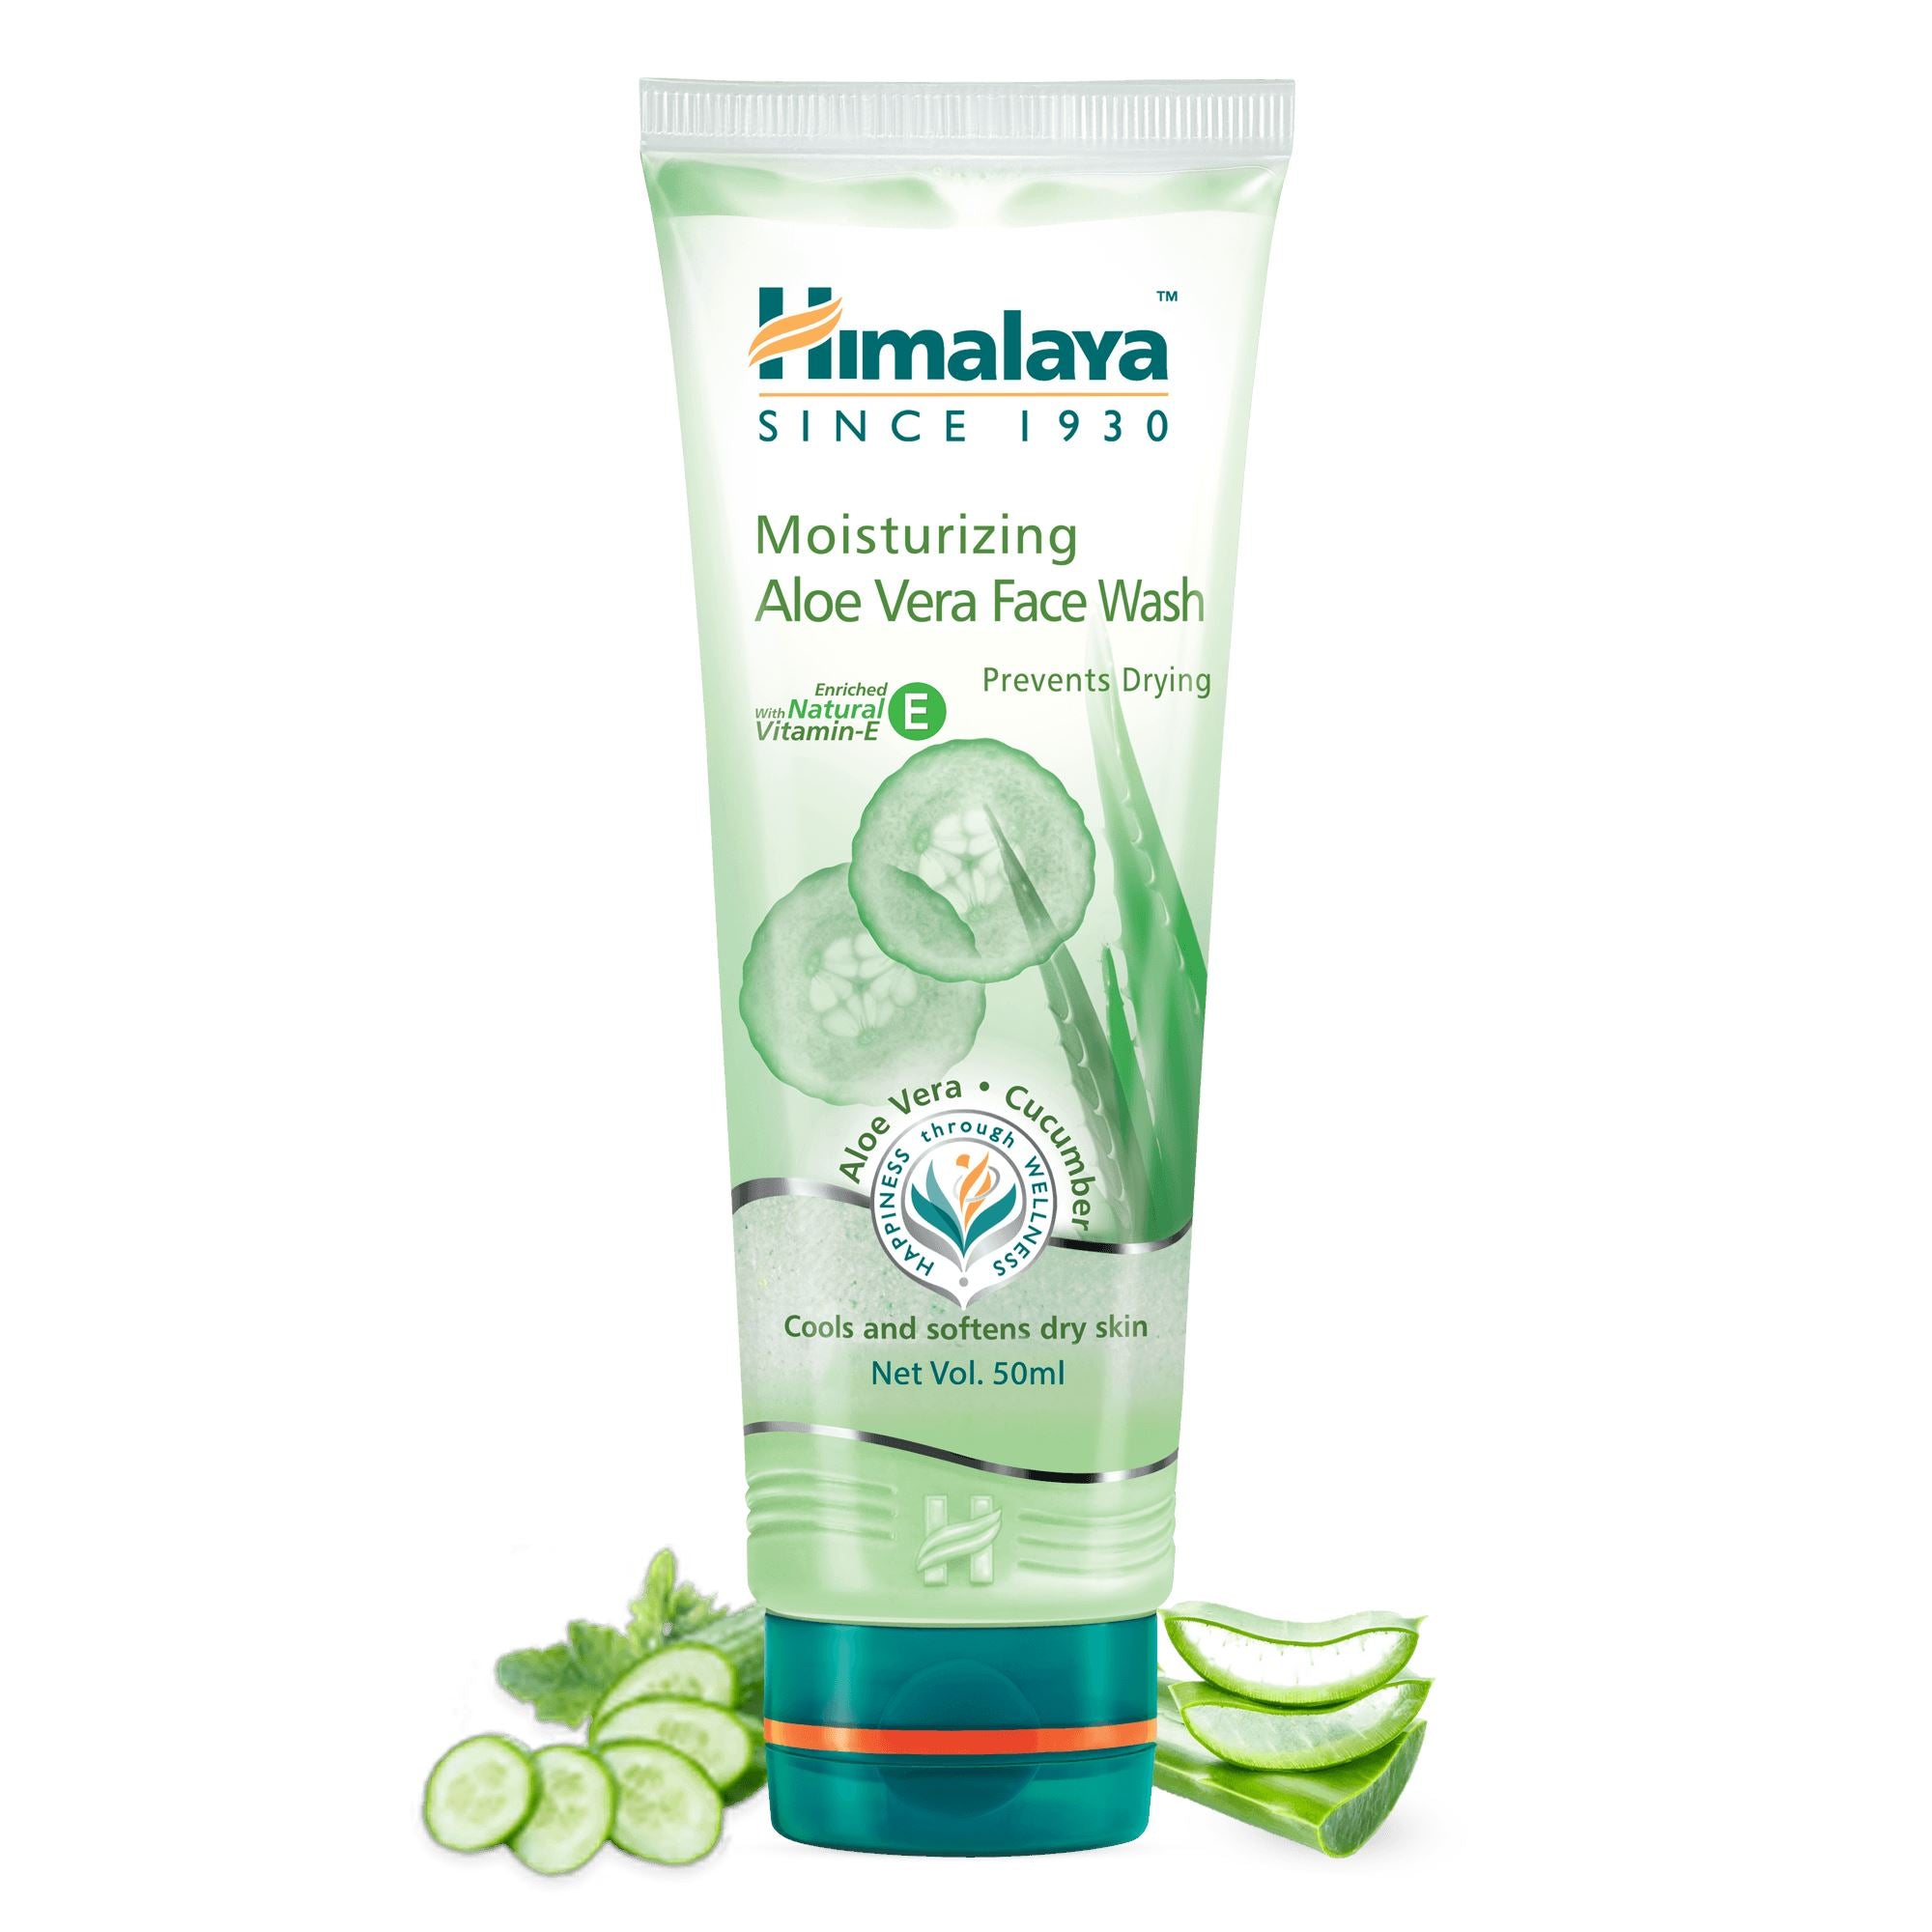 Himalaya Moisturizing Aloe Vera Face Wash 50ml - Cools and softens dry skin